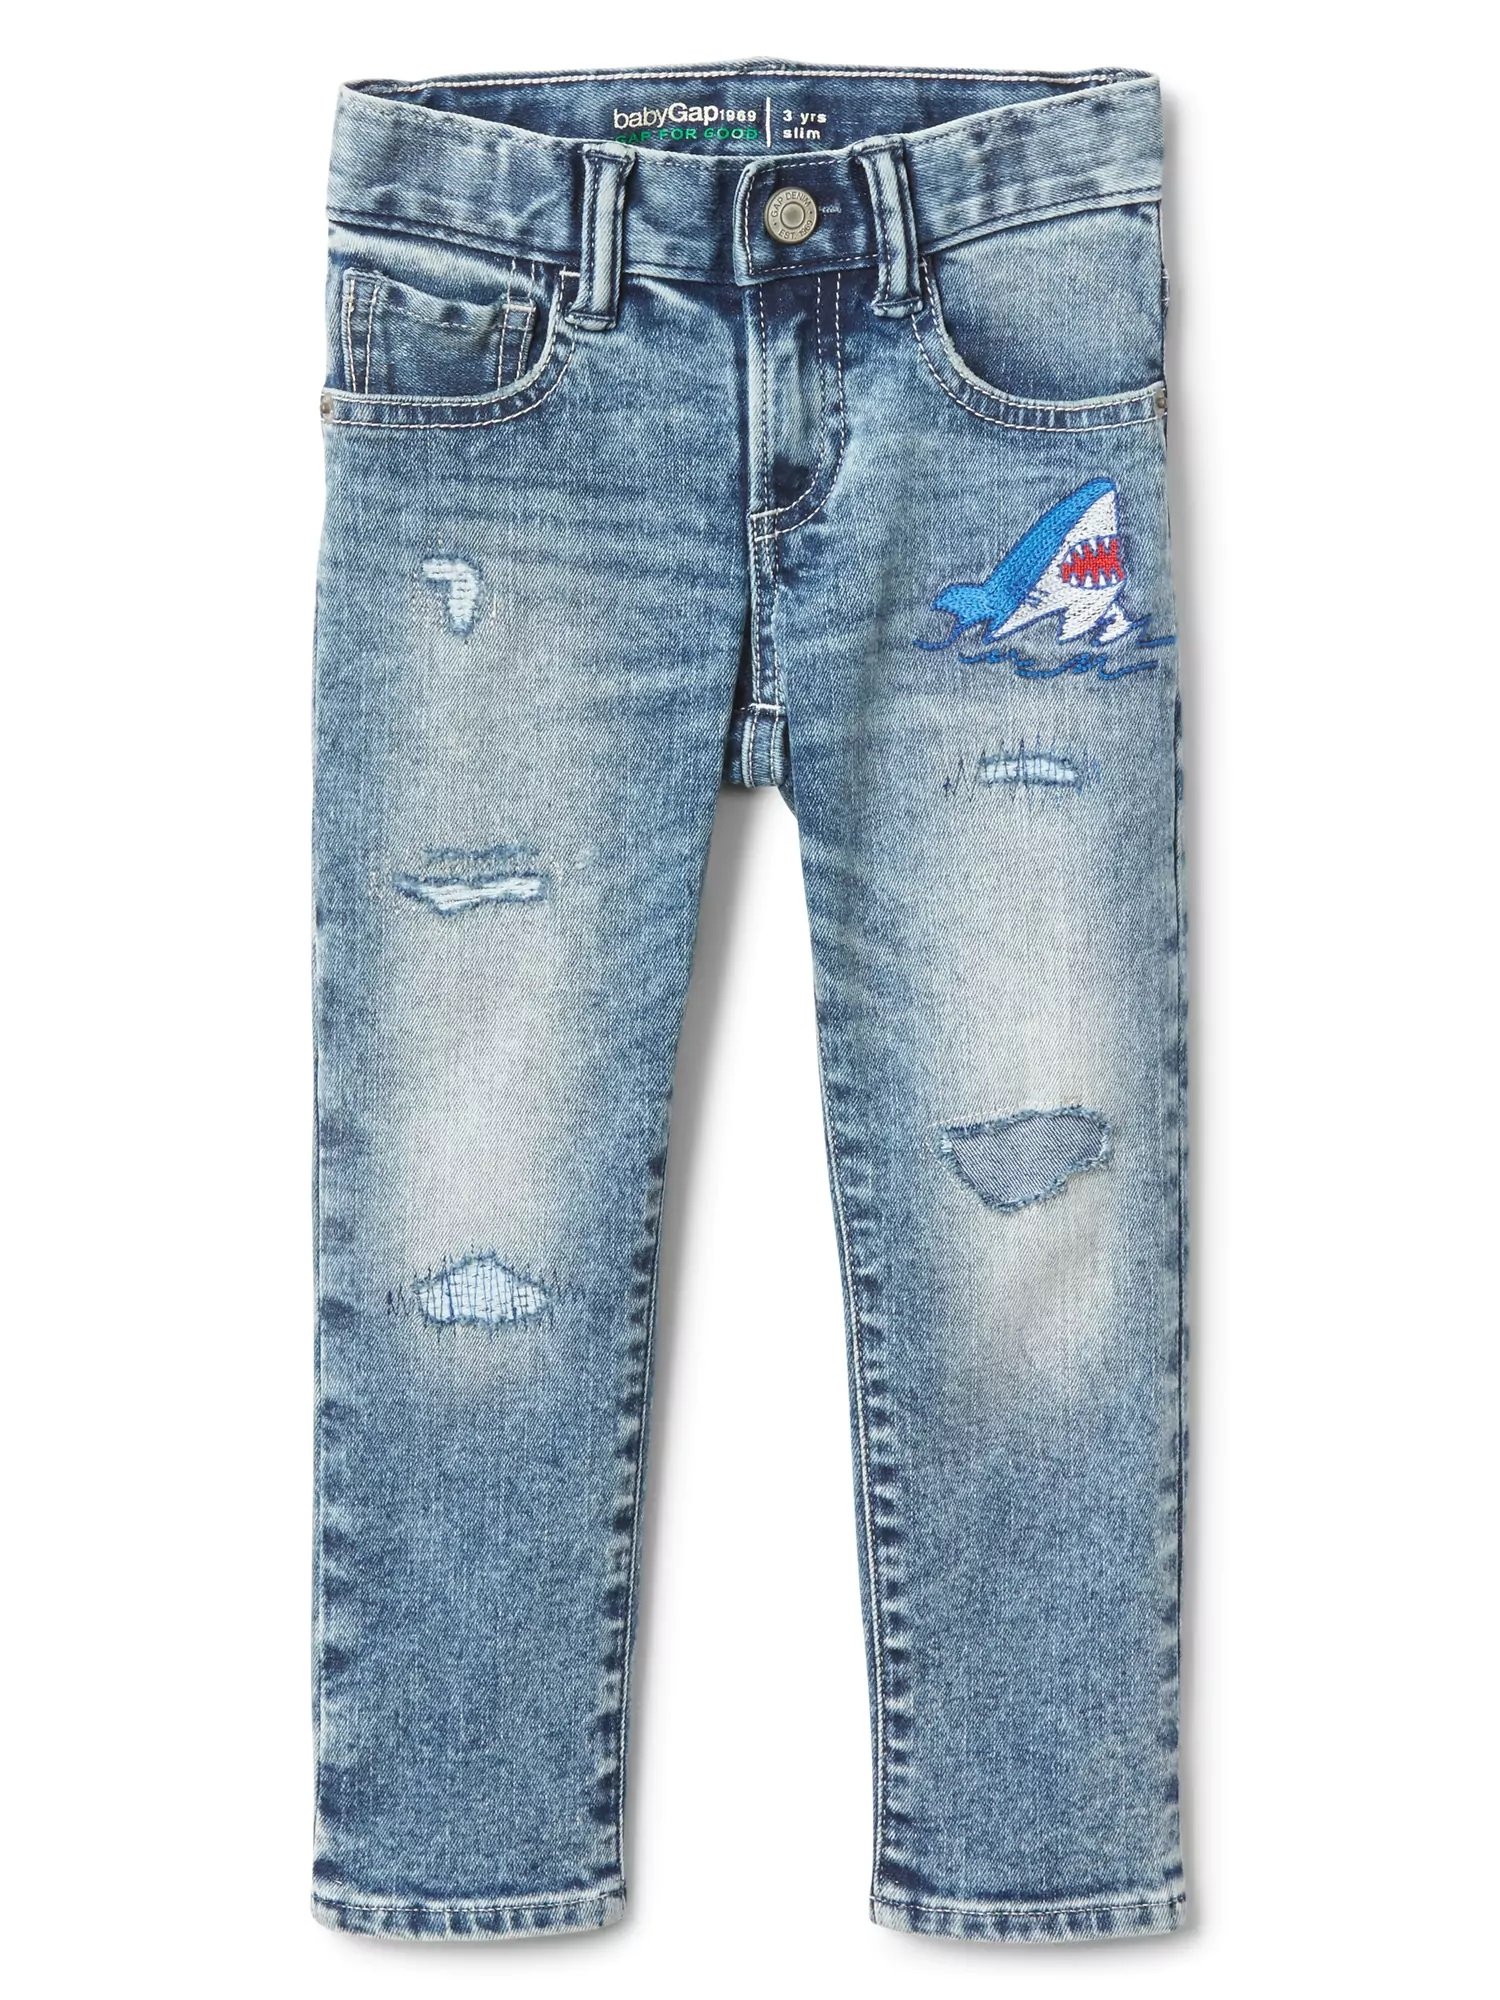 Gap for Good Slim Fit Fantastiflex köpek balığı detaylı jean pantolon product image